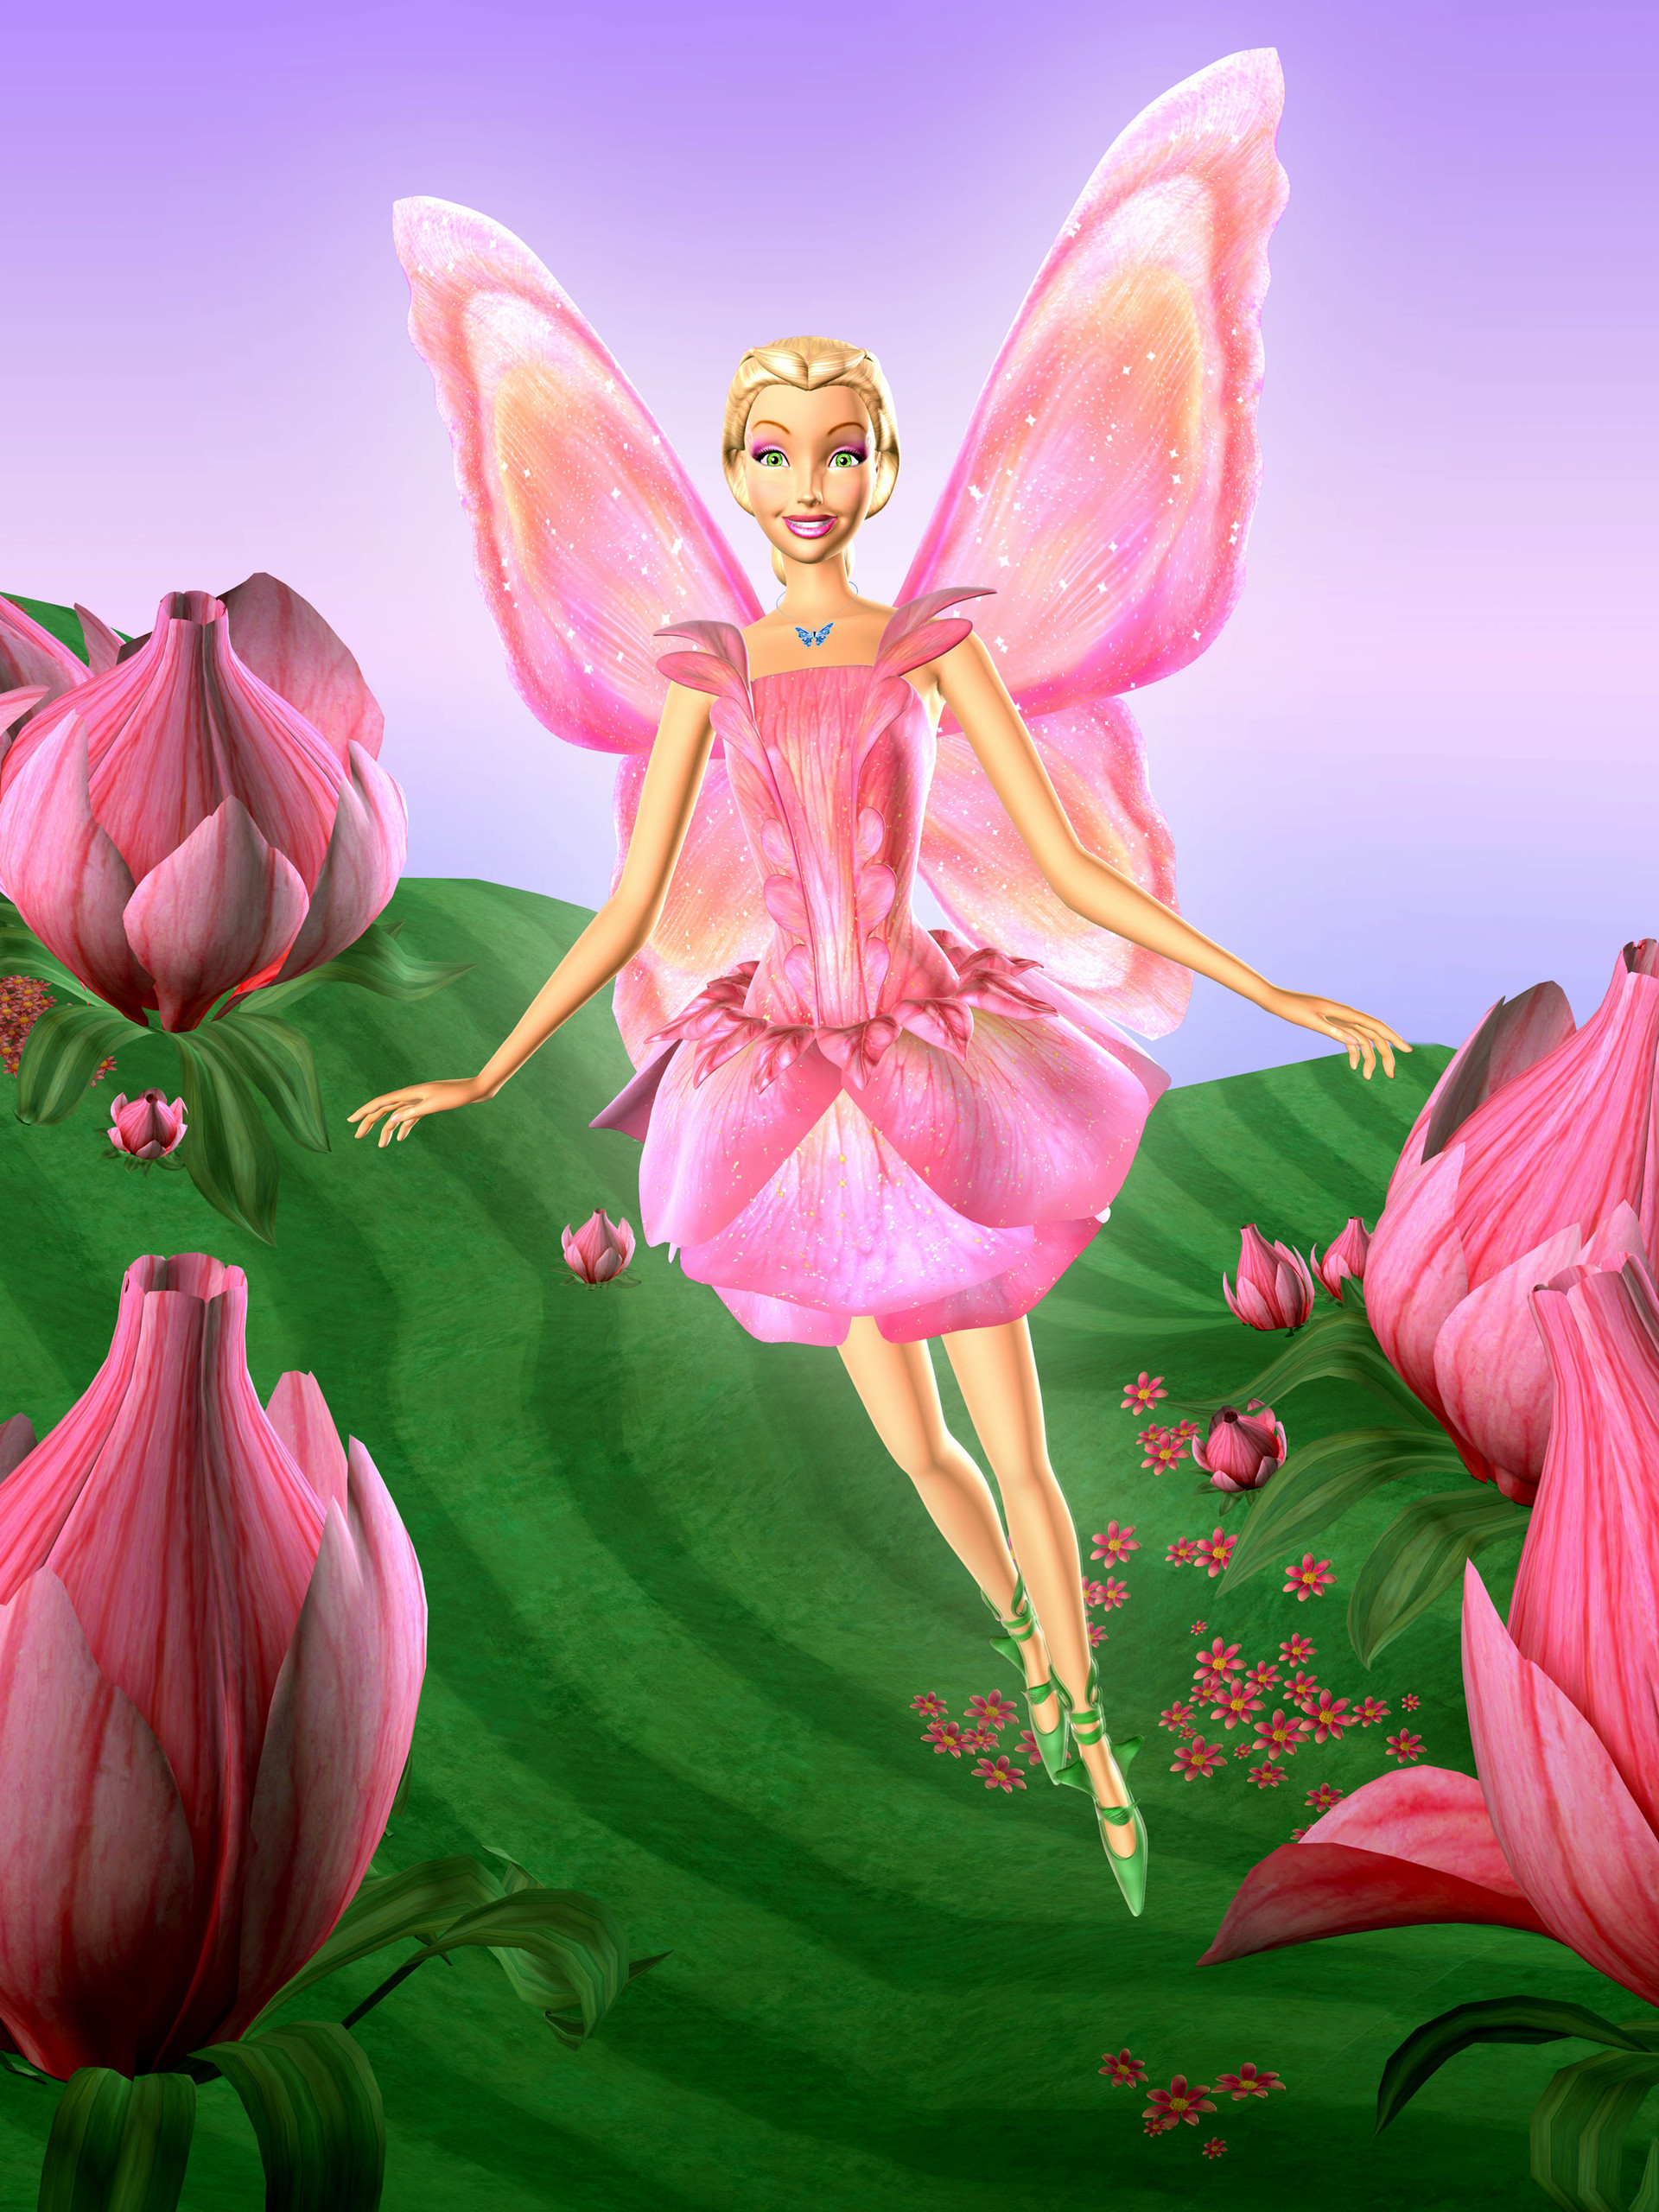 Animated Fairy Wallpaper